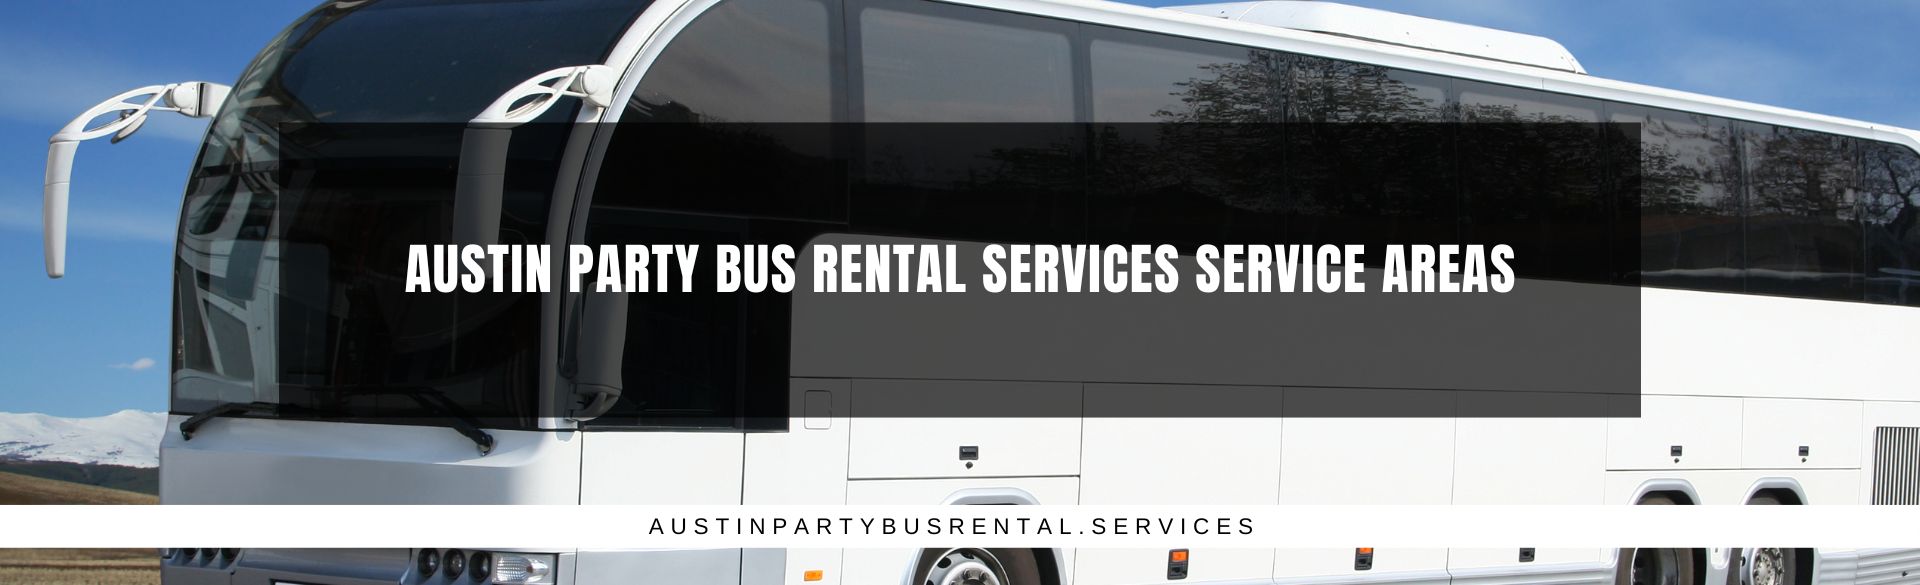 Austin Party Bus Rental Services Service Areas